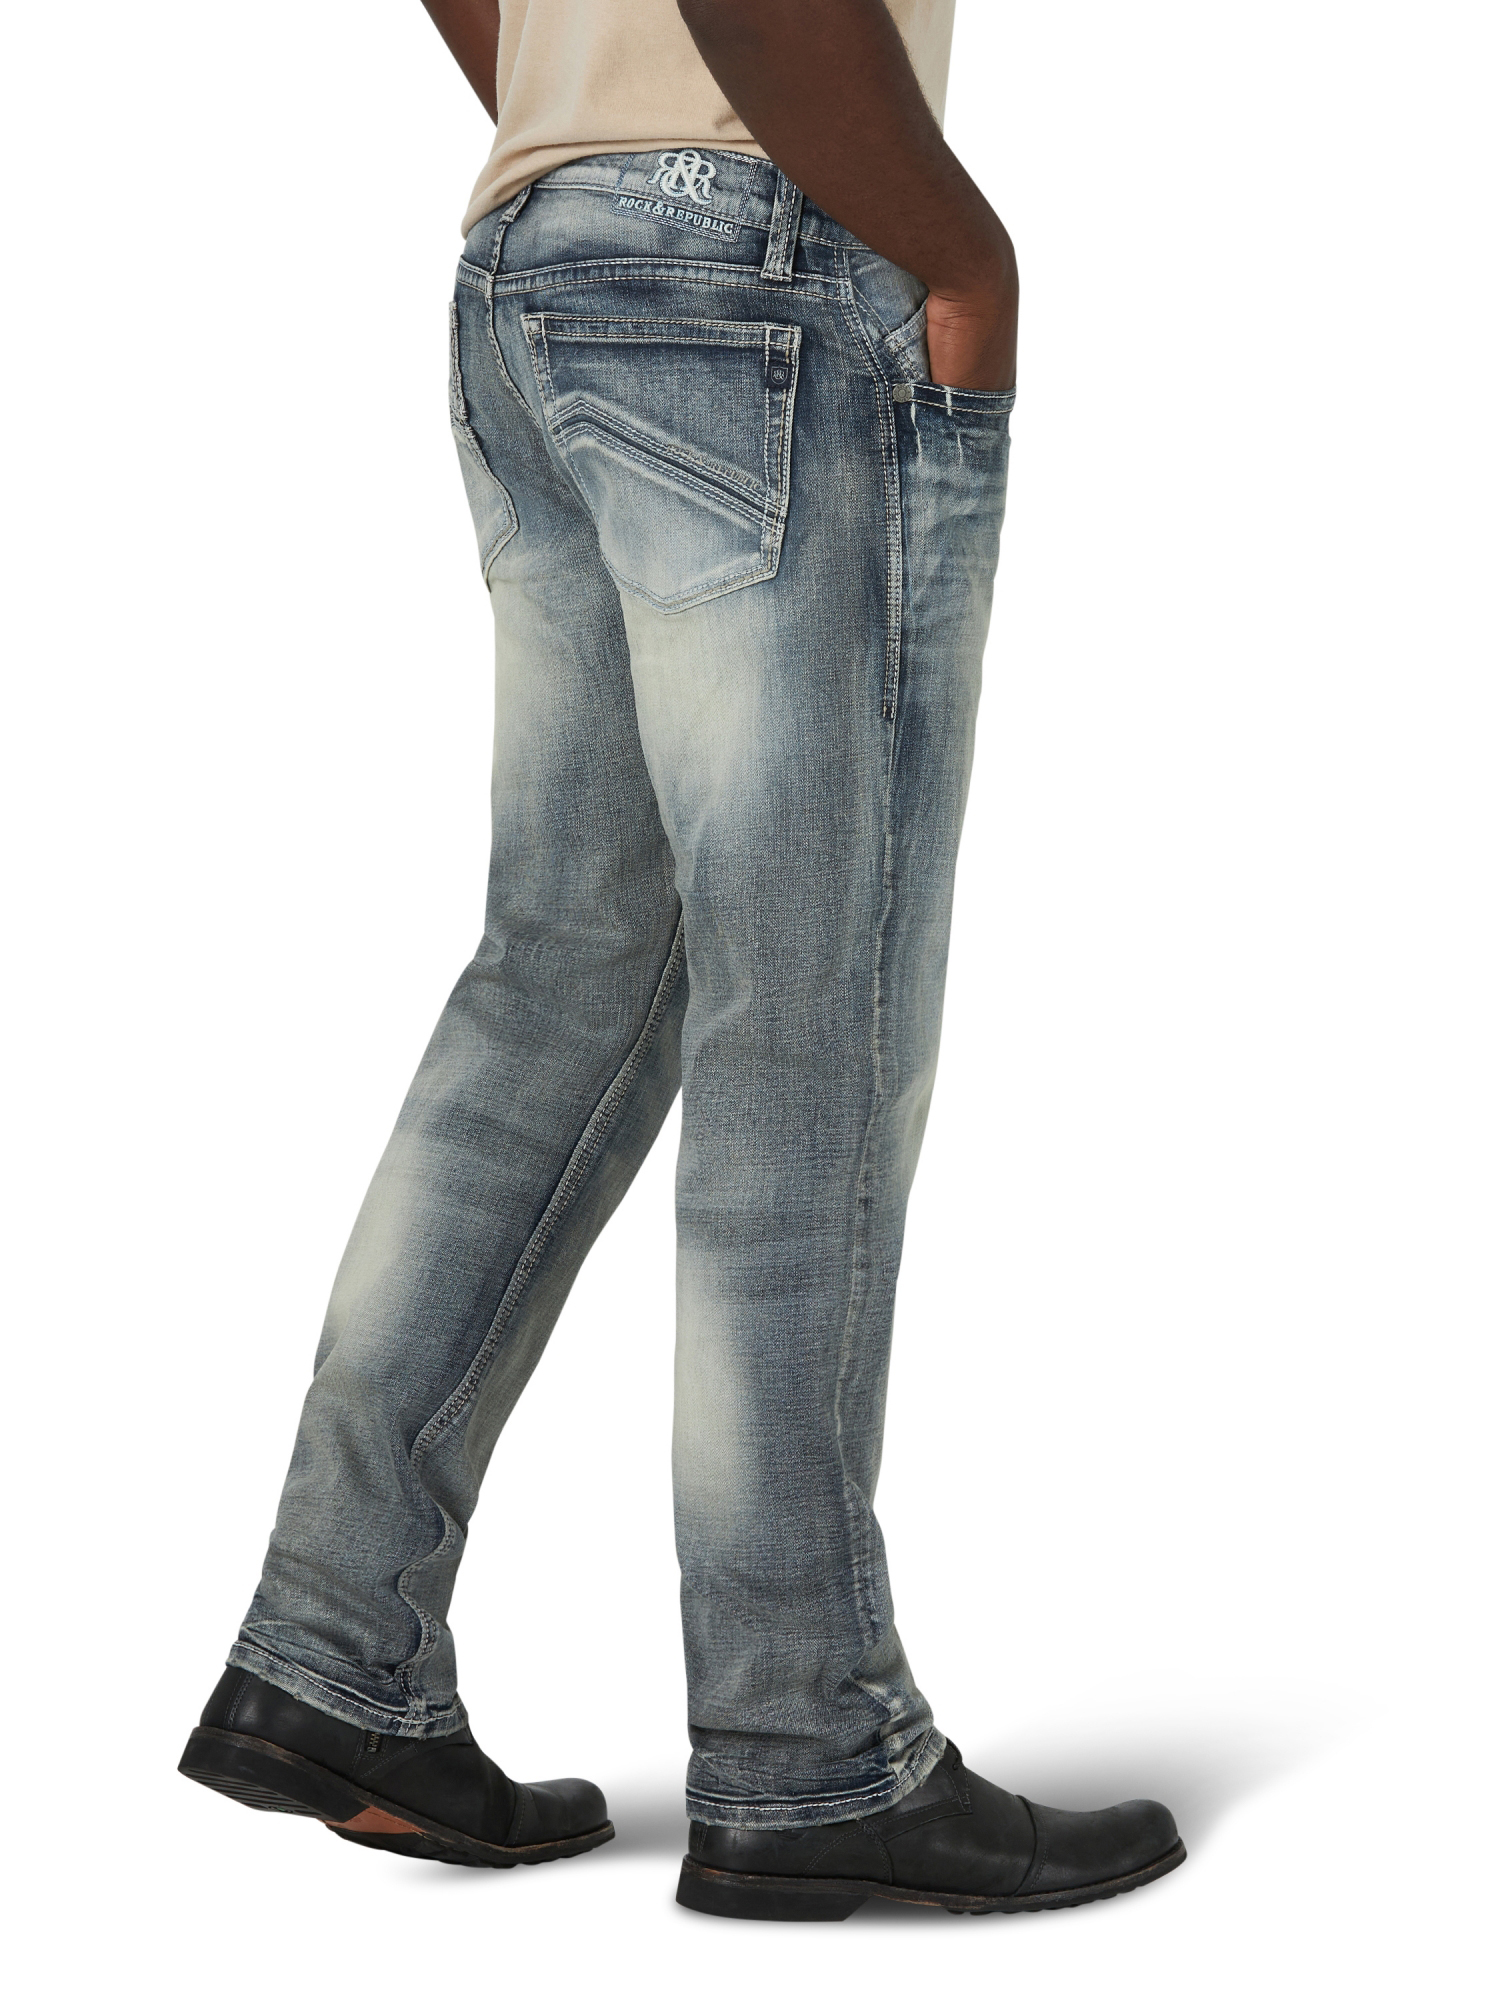 Rock & Republic Men's Straight Leg Jean with Ultra Comfort Denim - image 3 of 6